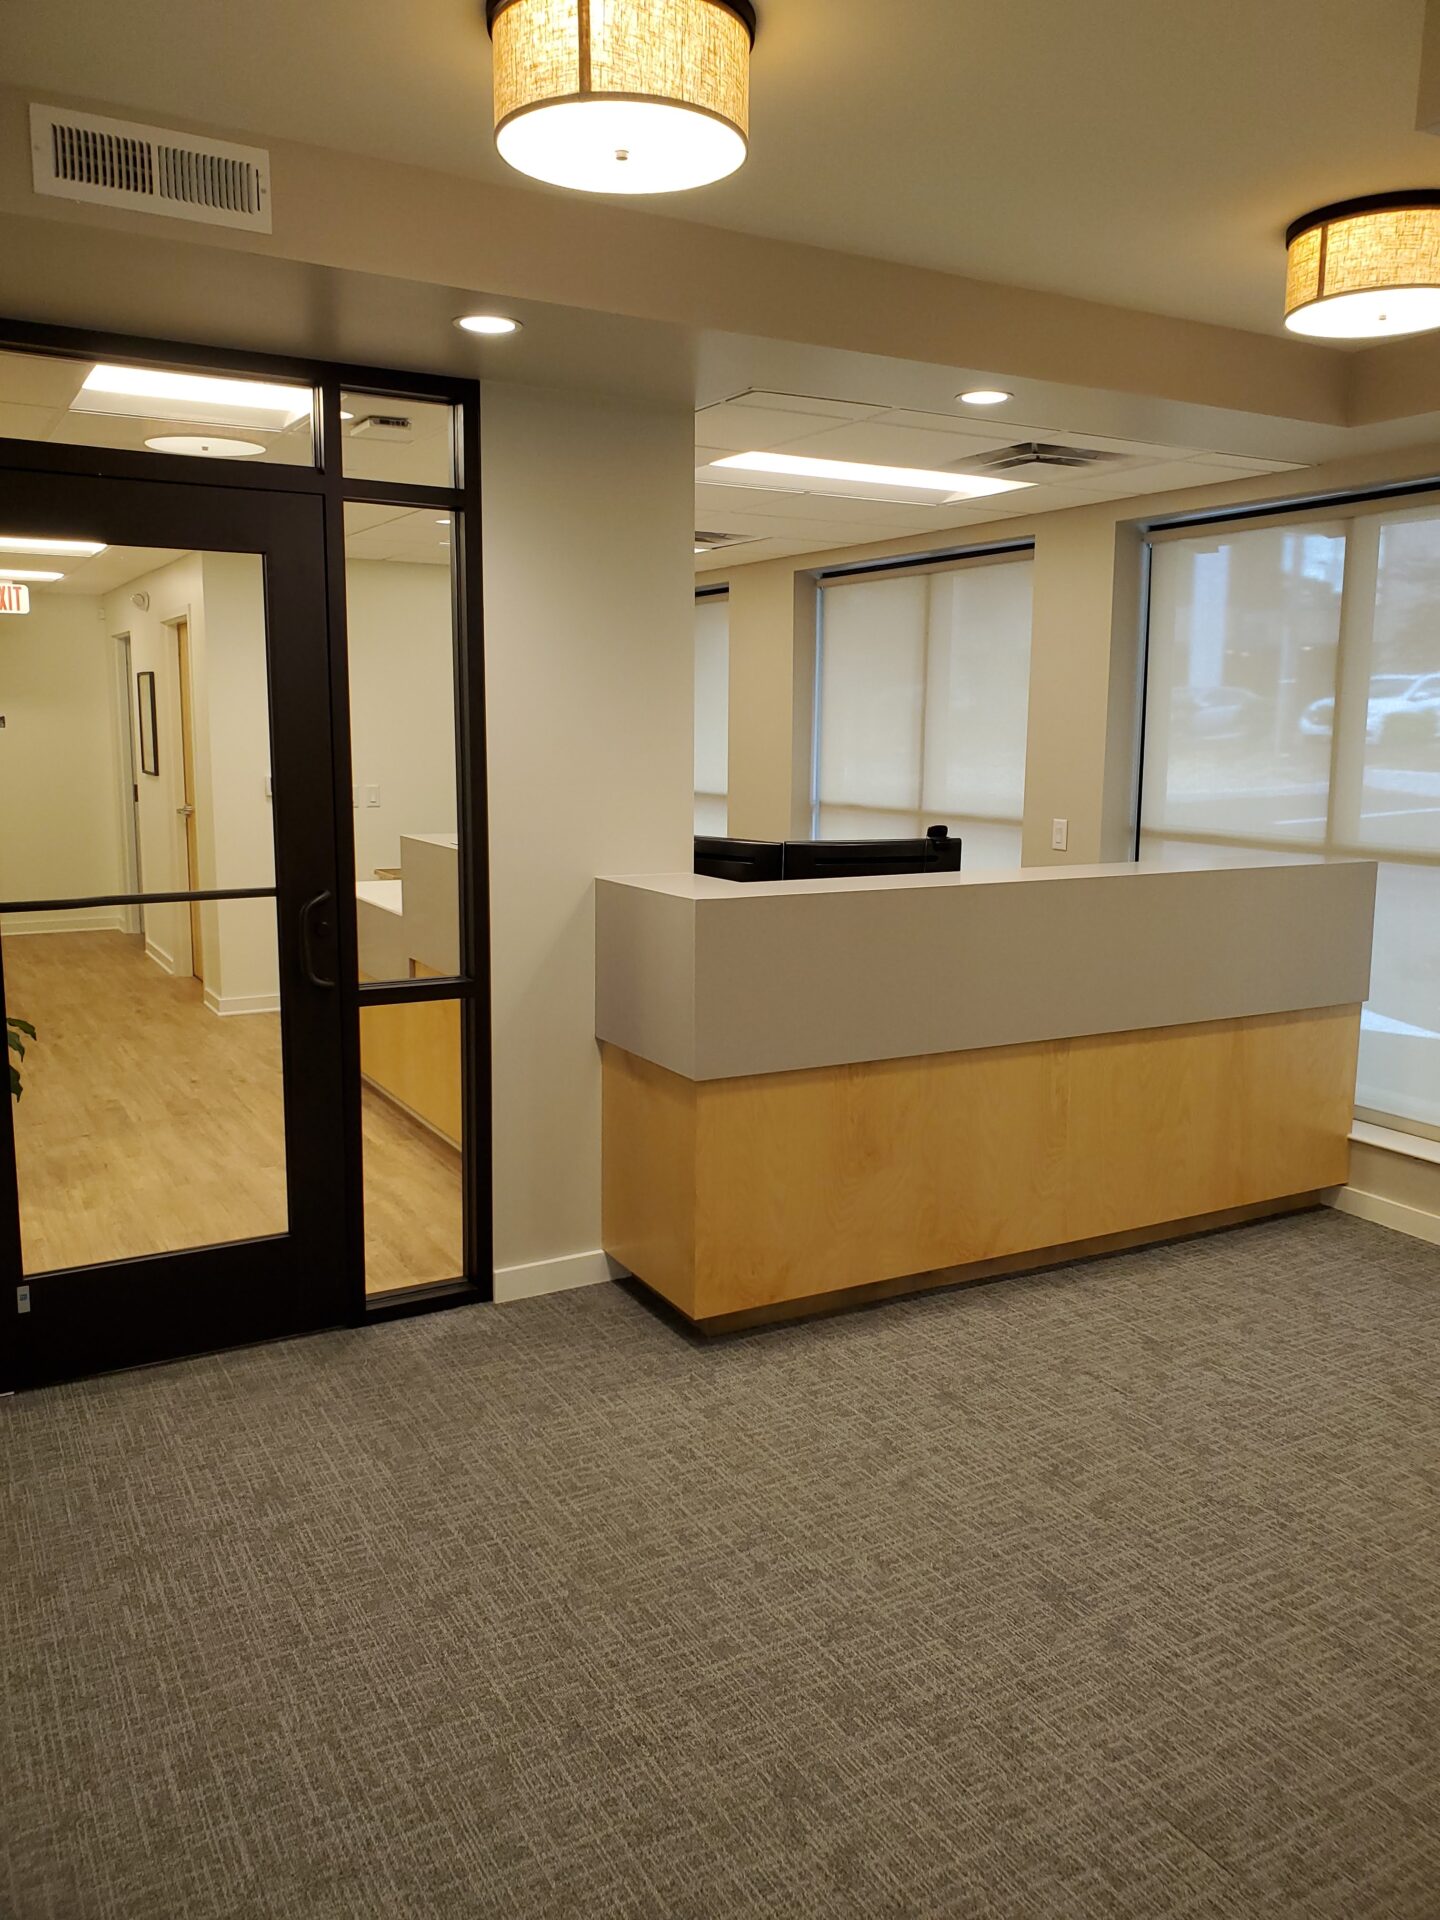 A Reception Area With Carpet in Cream Color